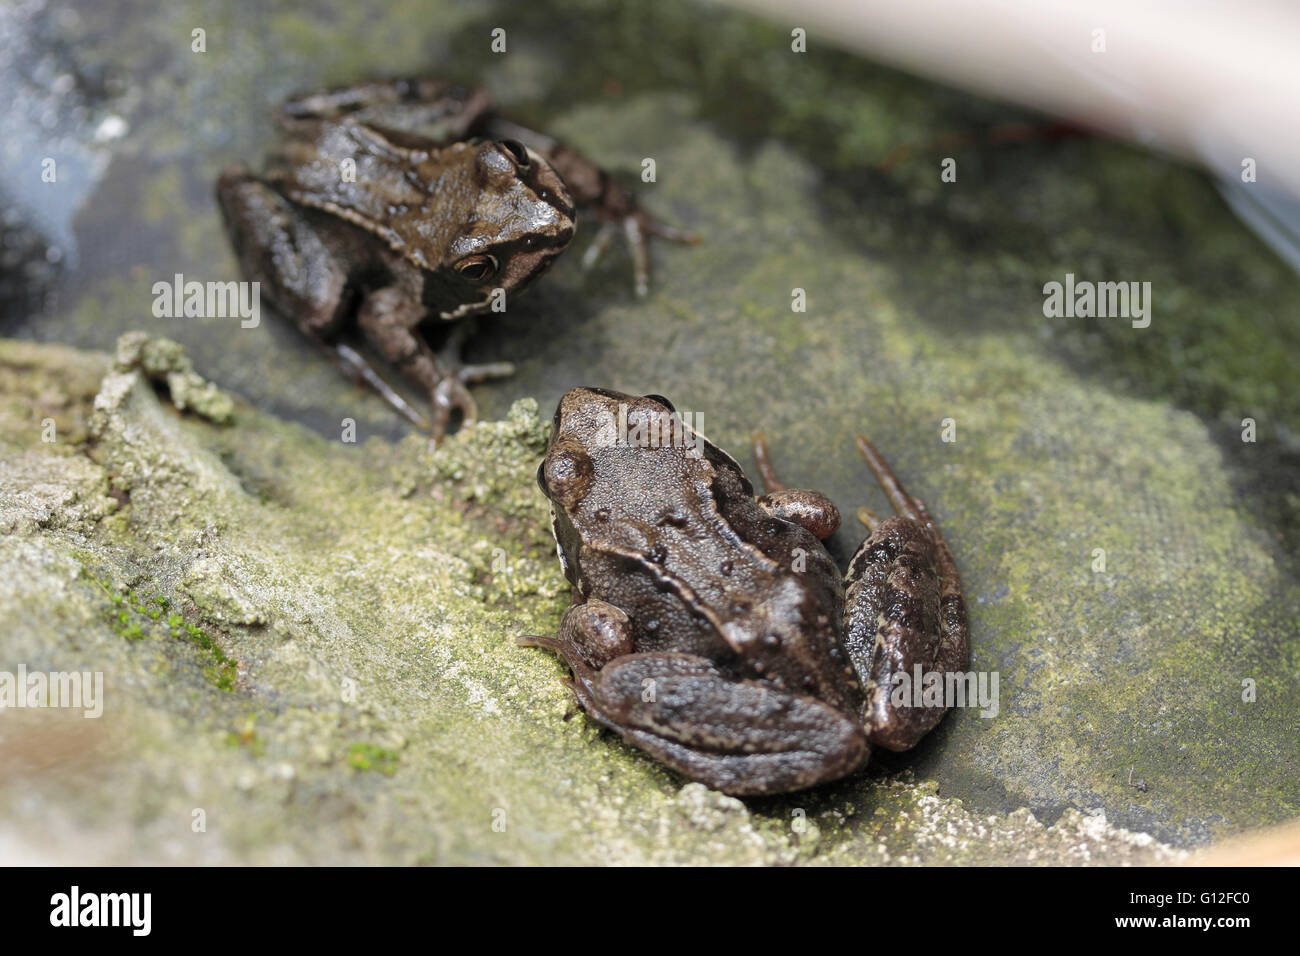 Common English frogs rana temporaria in a garden pond Stock Photo